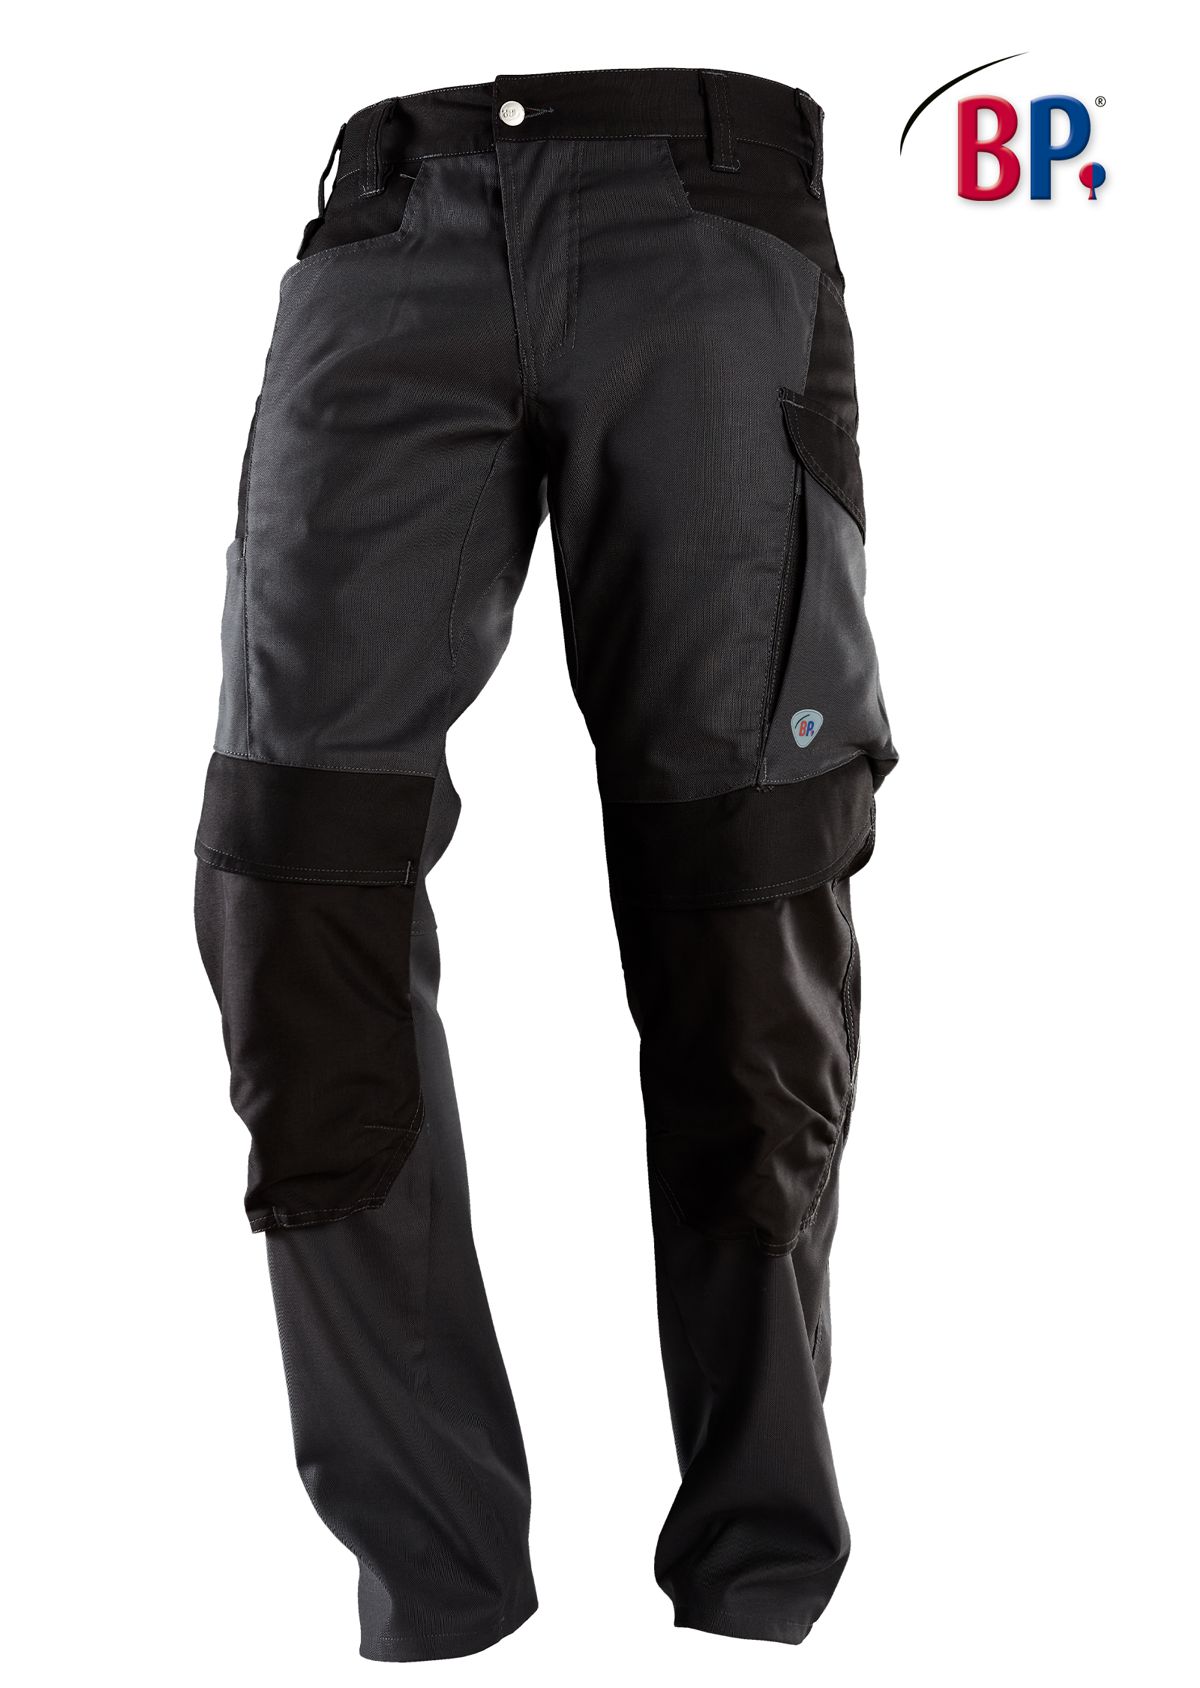 BP® Pantalon de travail robuste avec genouillères